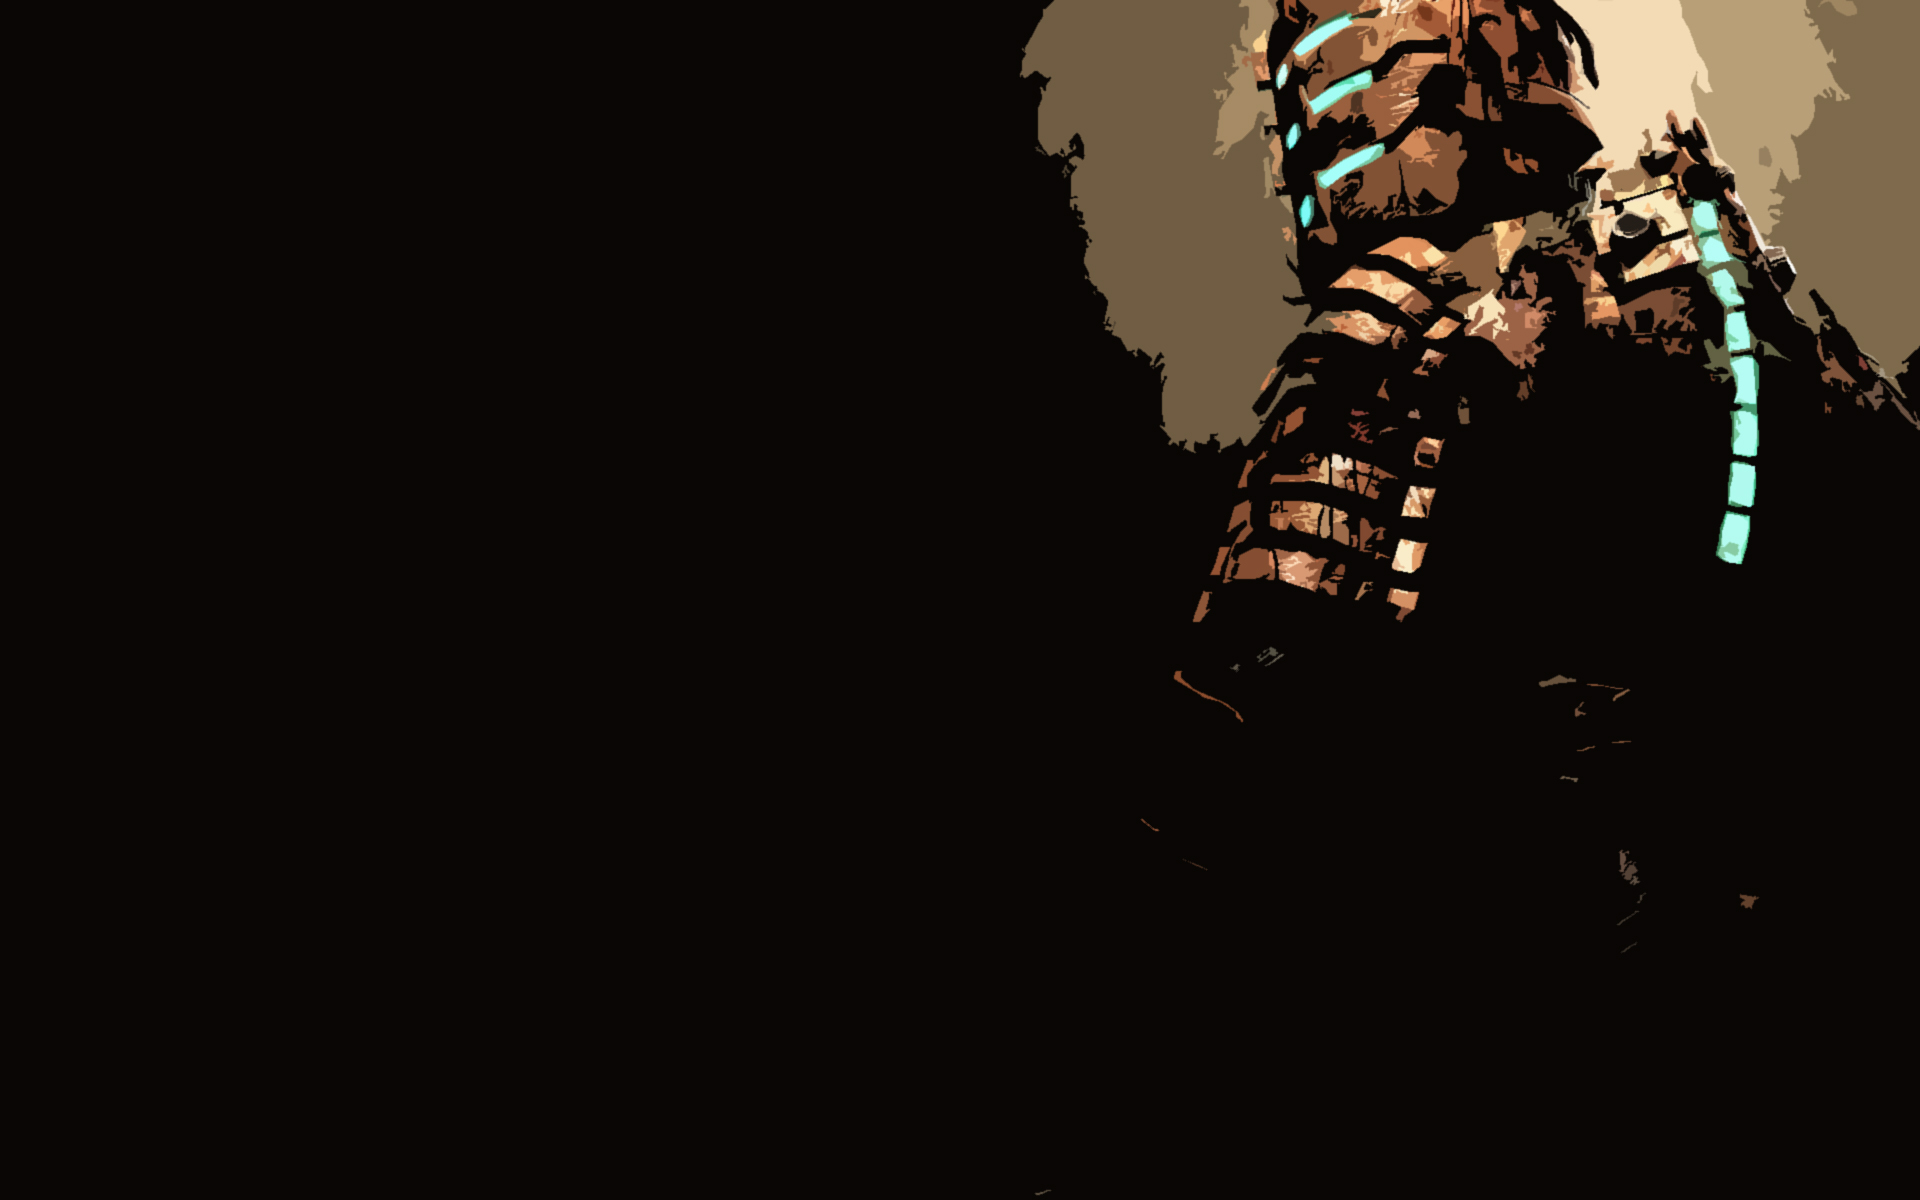 Dead Space, Isaac Clarke, games - desktop wallpaper